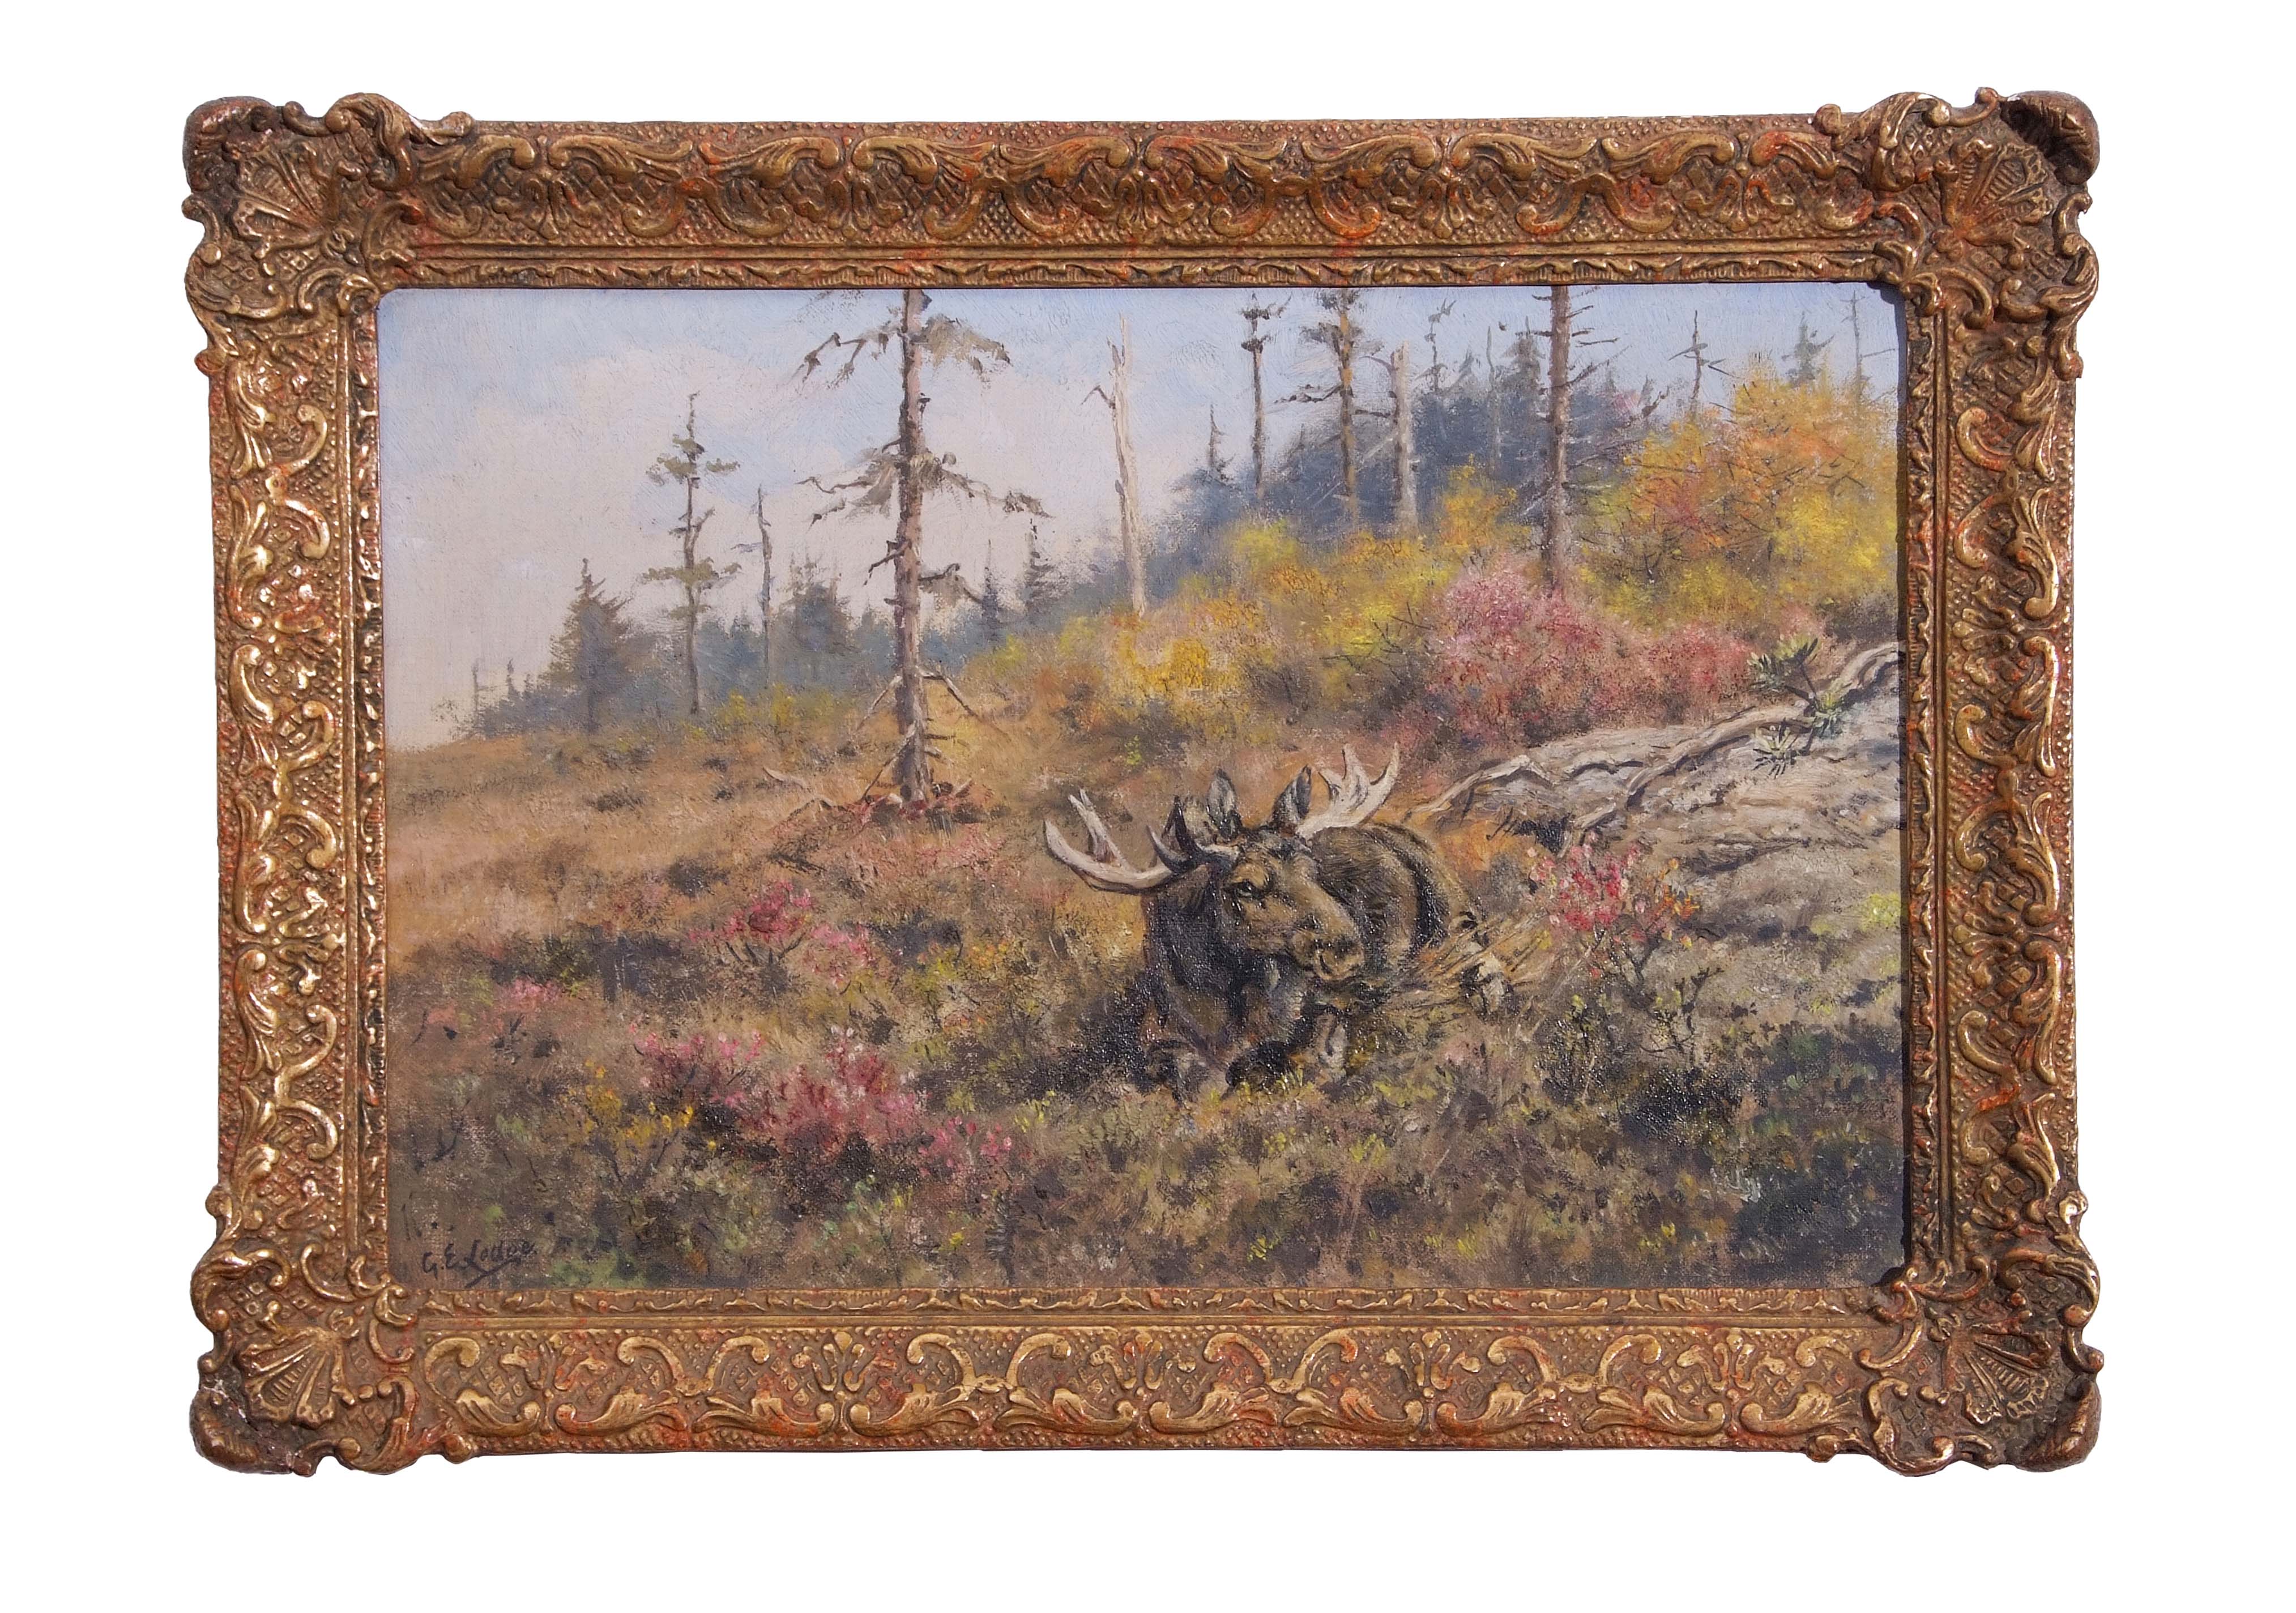 AR George Edward Lodge (1860-1954) "Norwegian Elk" oil on board, signed lower left, 30 x 45cm